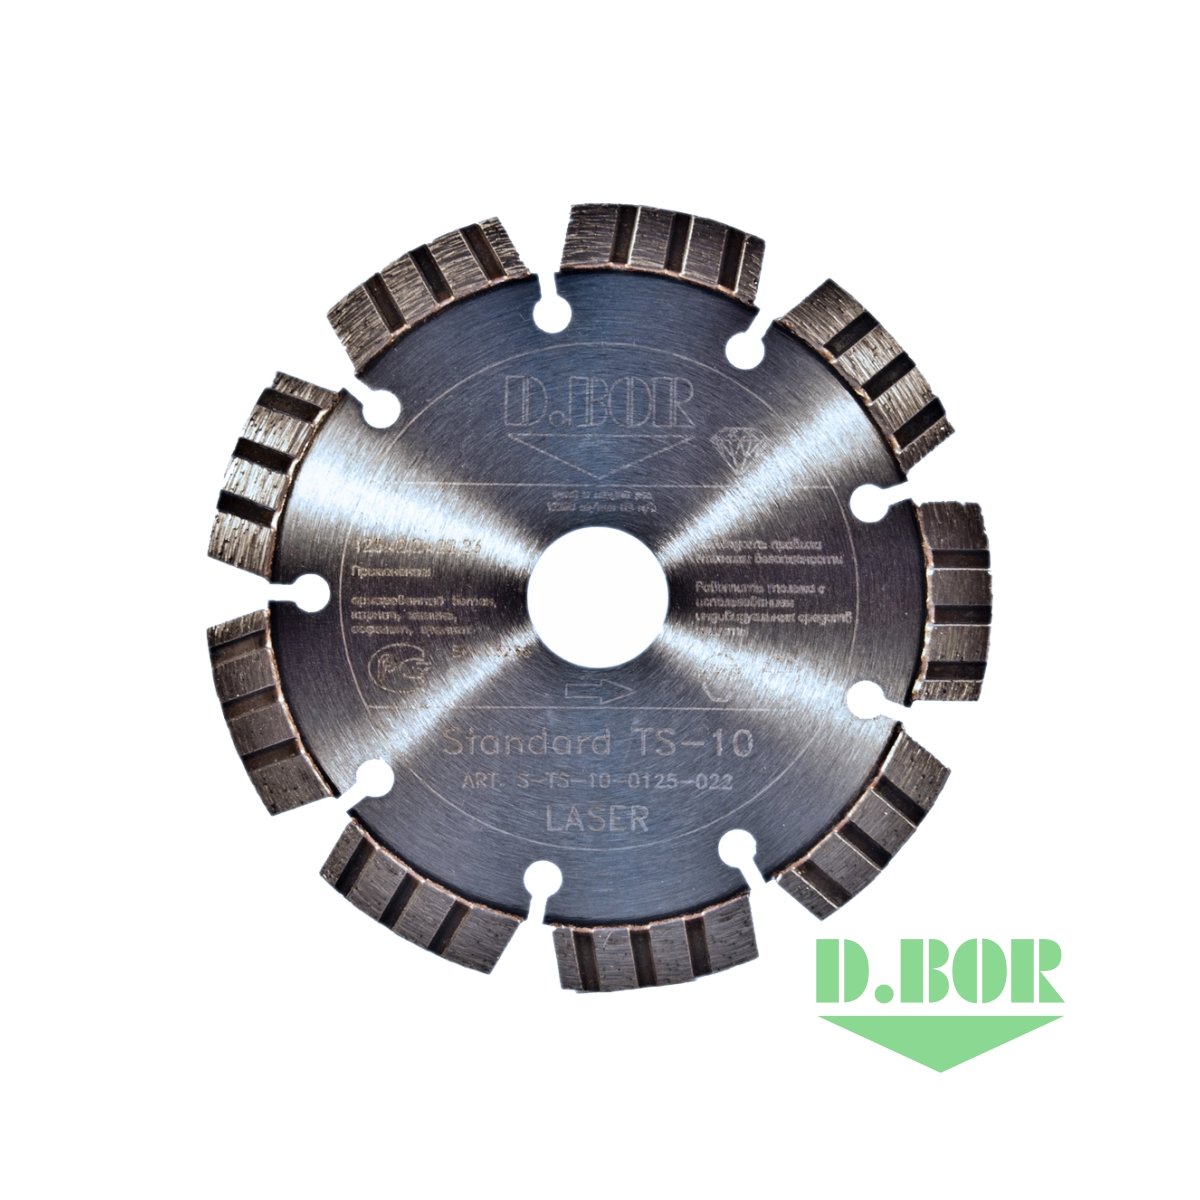 Алмазный диск Standard TS-10, 300x3,0x30/25,4 (арт. S-TS-10-0300-030) "D.BOR"